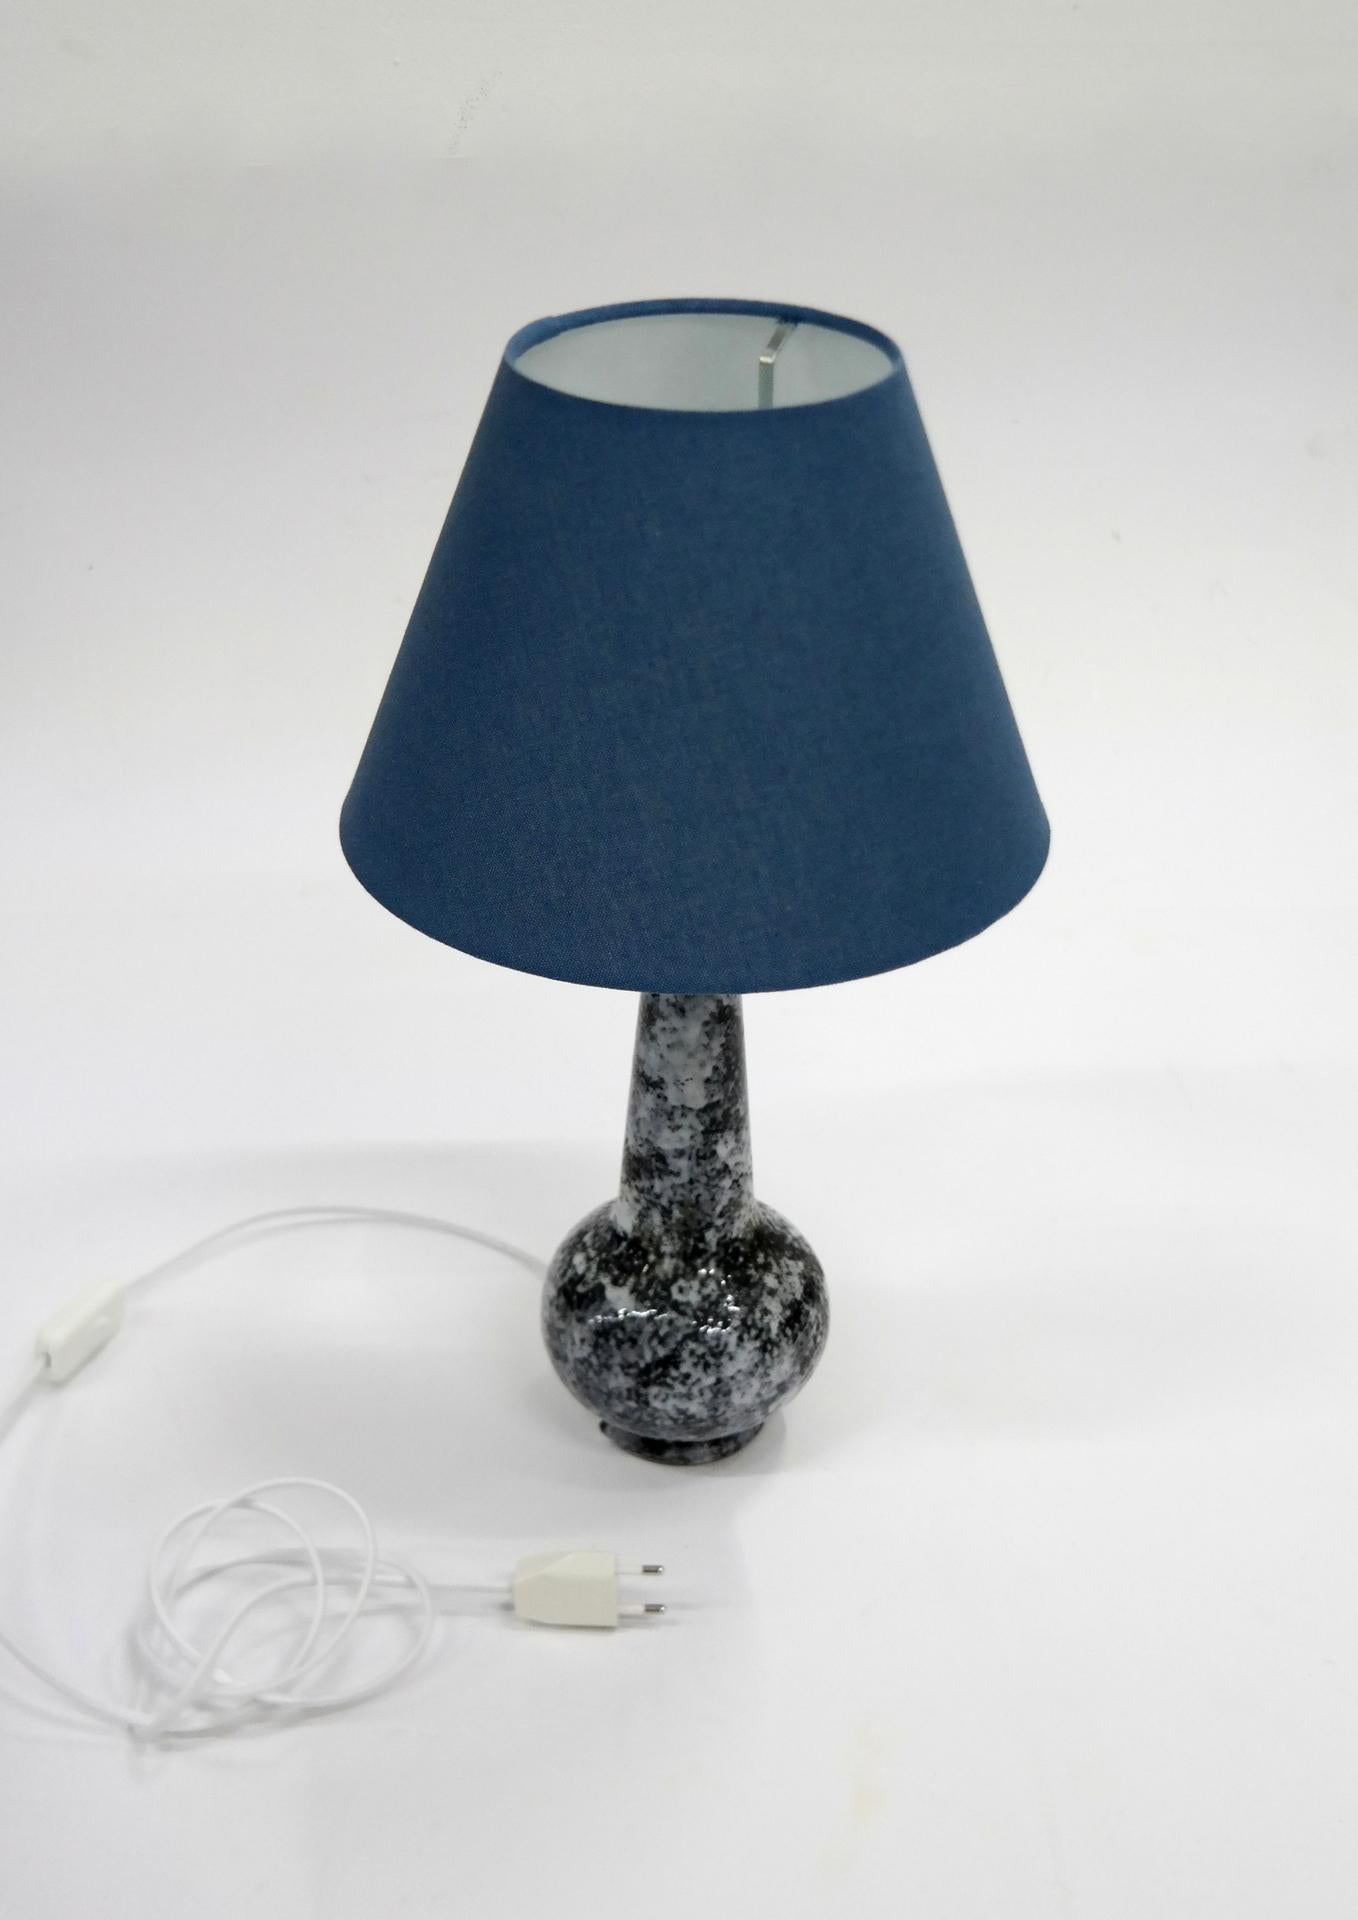 Mid-Century Modern ceramic table lamp, 1970s. Handmade, signed ceramic with high gloss glaze.